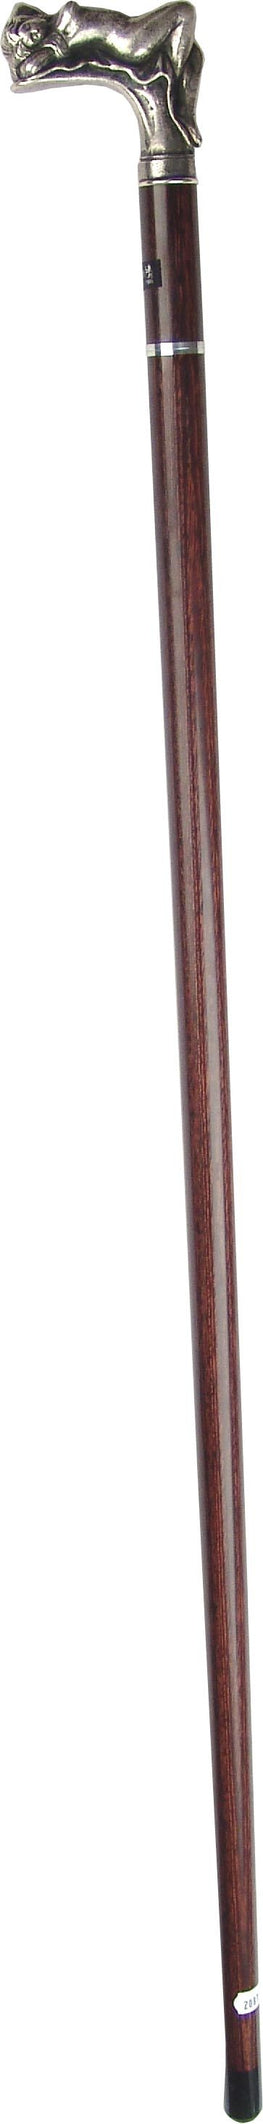 Fayet Female Sculpture Sword Fritz Walking Cane With Stamina Wood Shaft